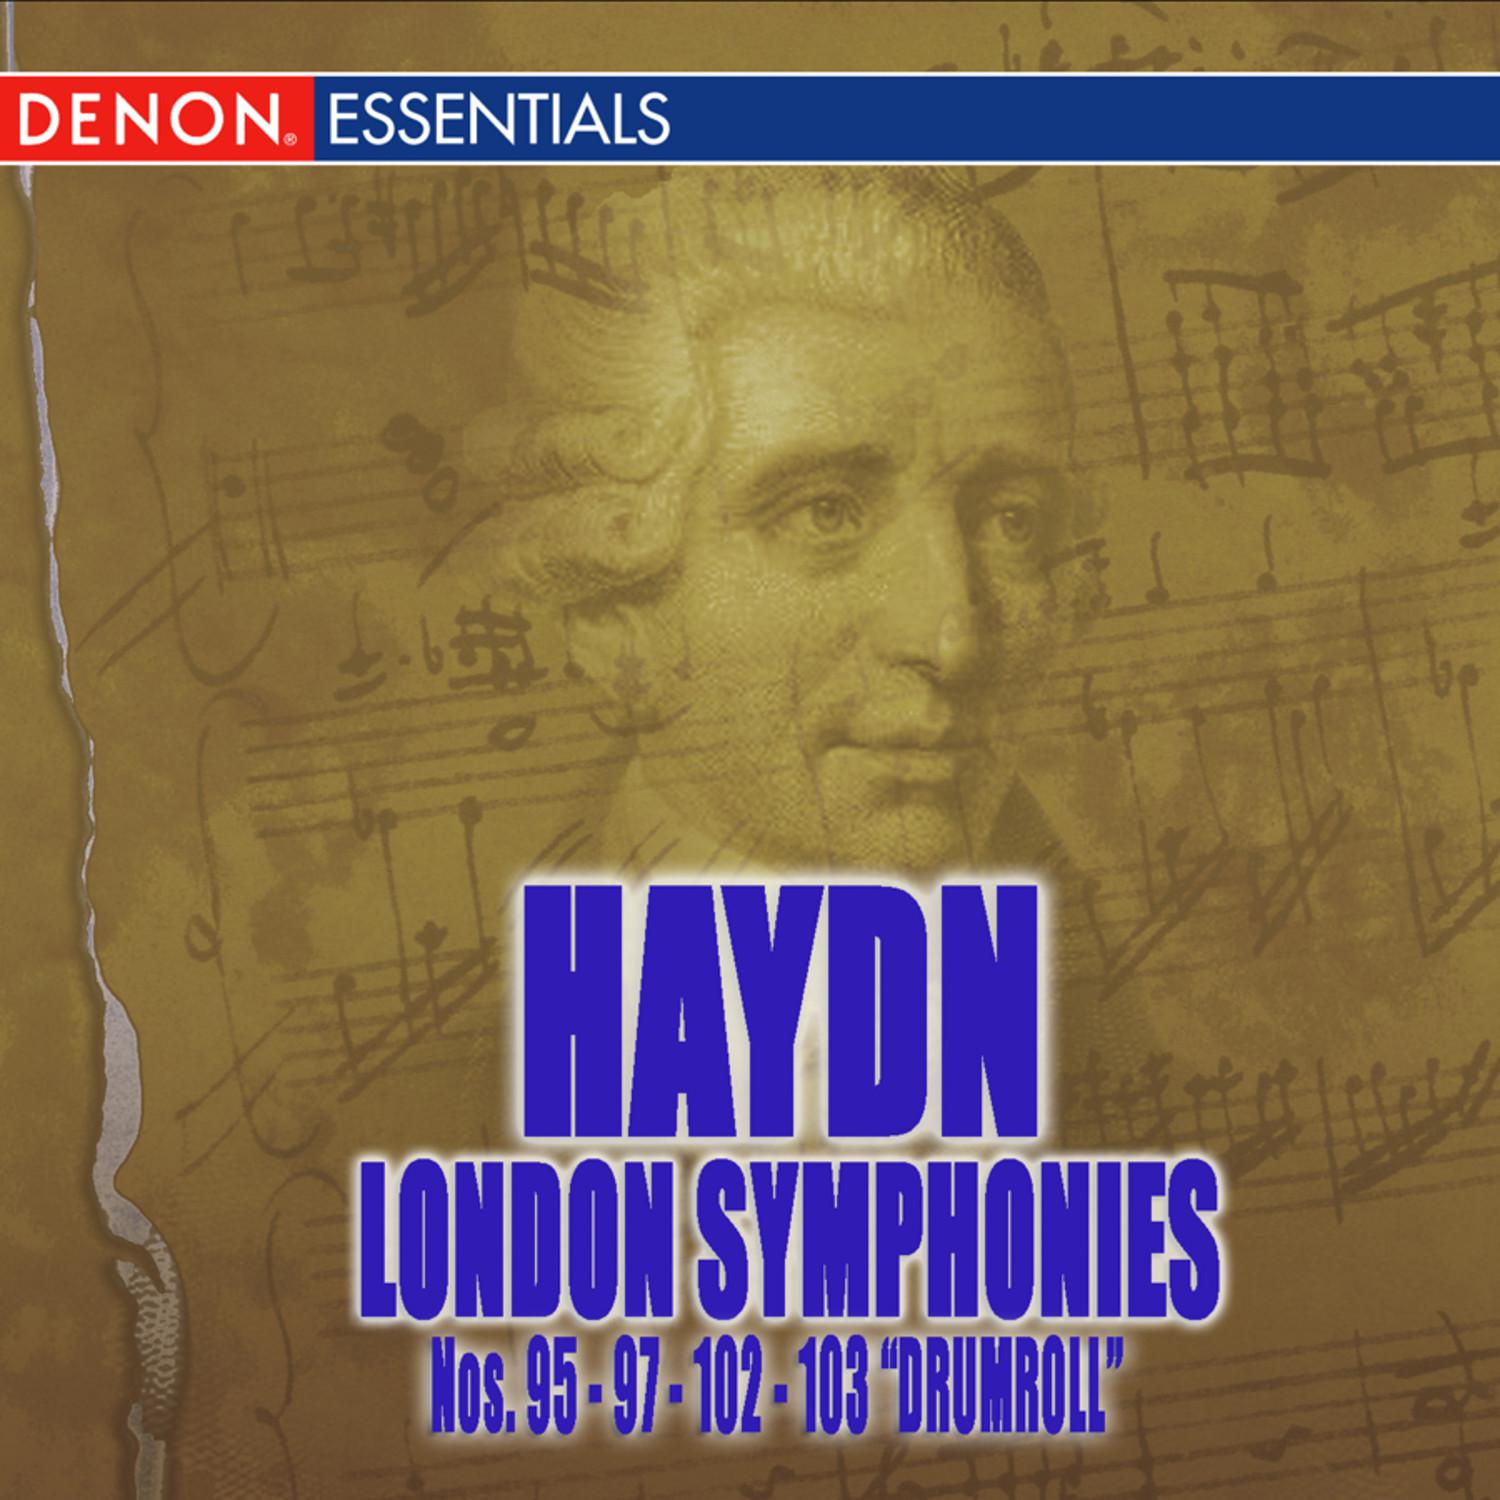 Haydn: London Symphonies Nos. 95 - 97 - 102 - 103 "Drumroll"